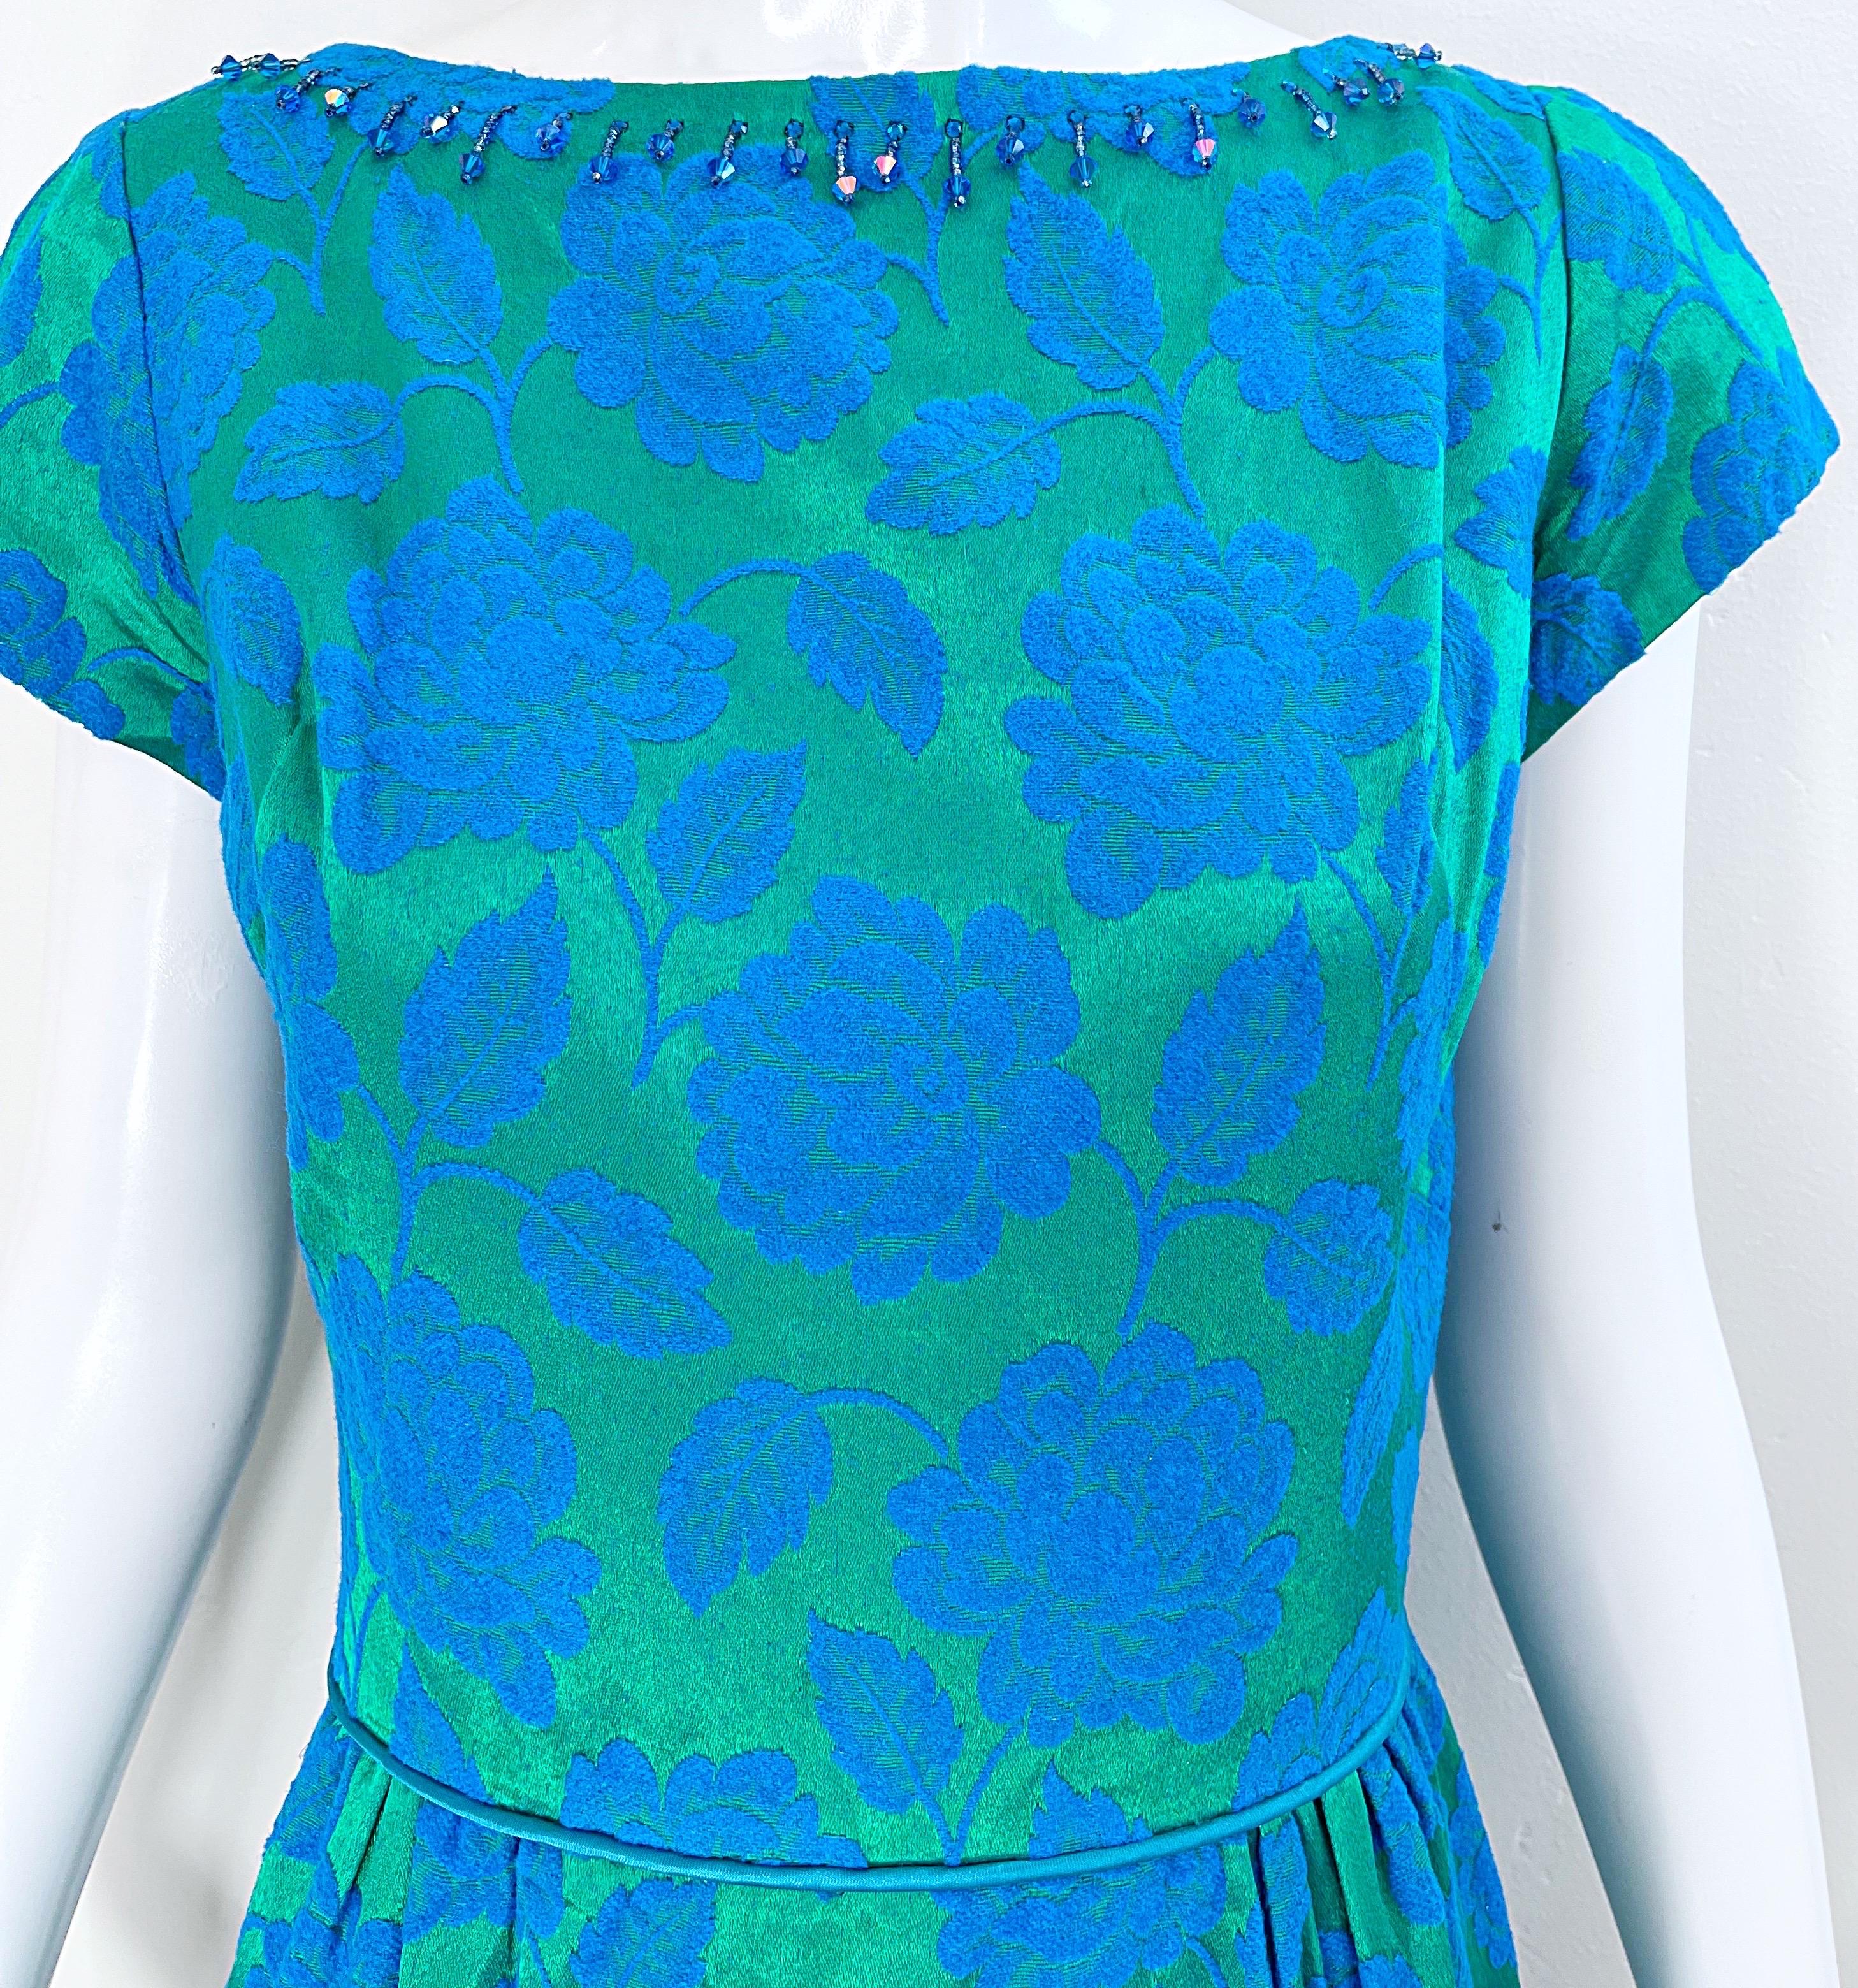 60s-style teal sheath dress